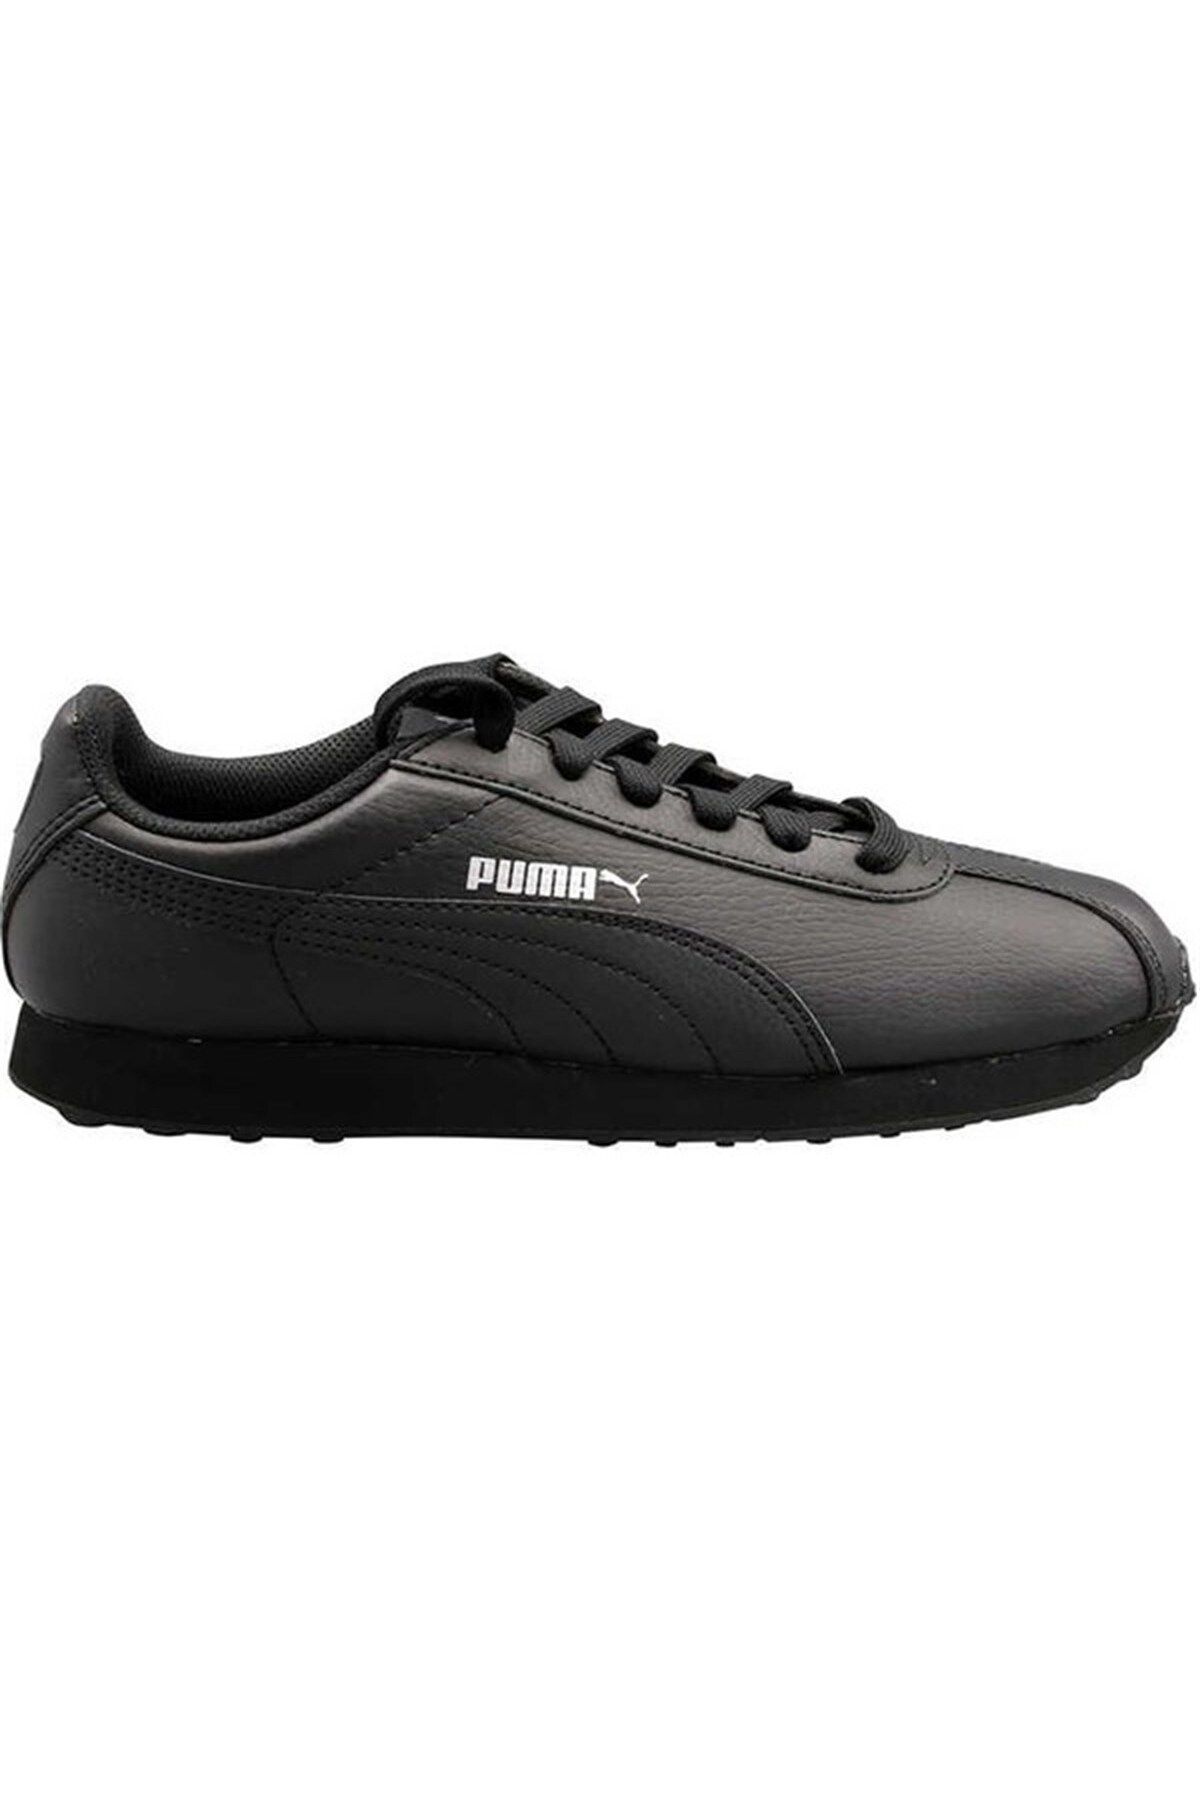 Puma Turin Iı Jr Unisex Ayakkabı